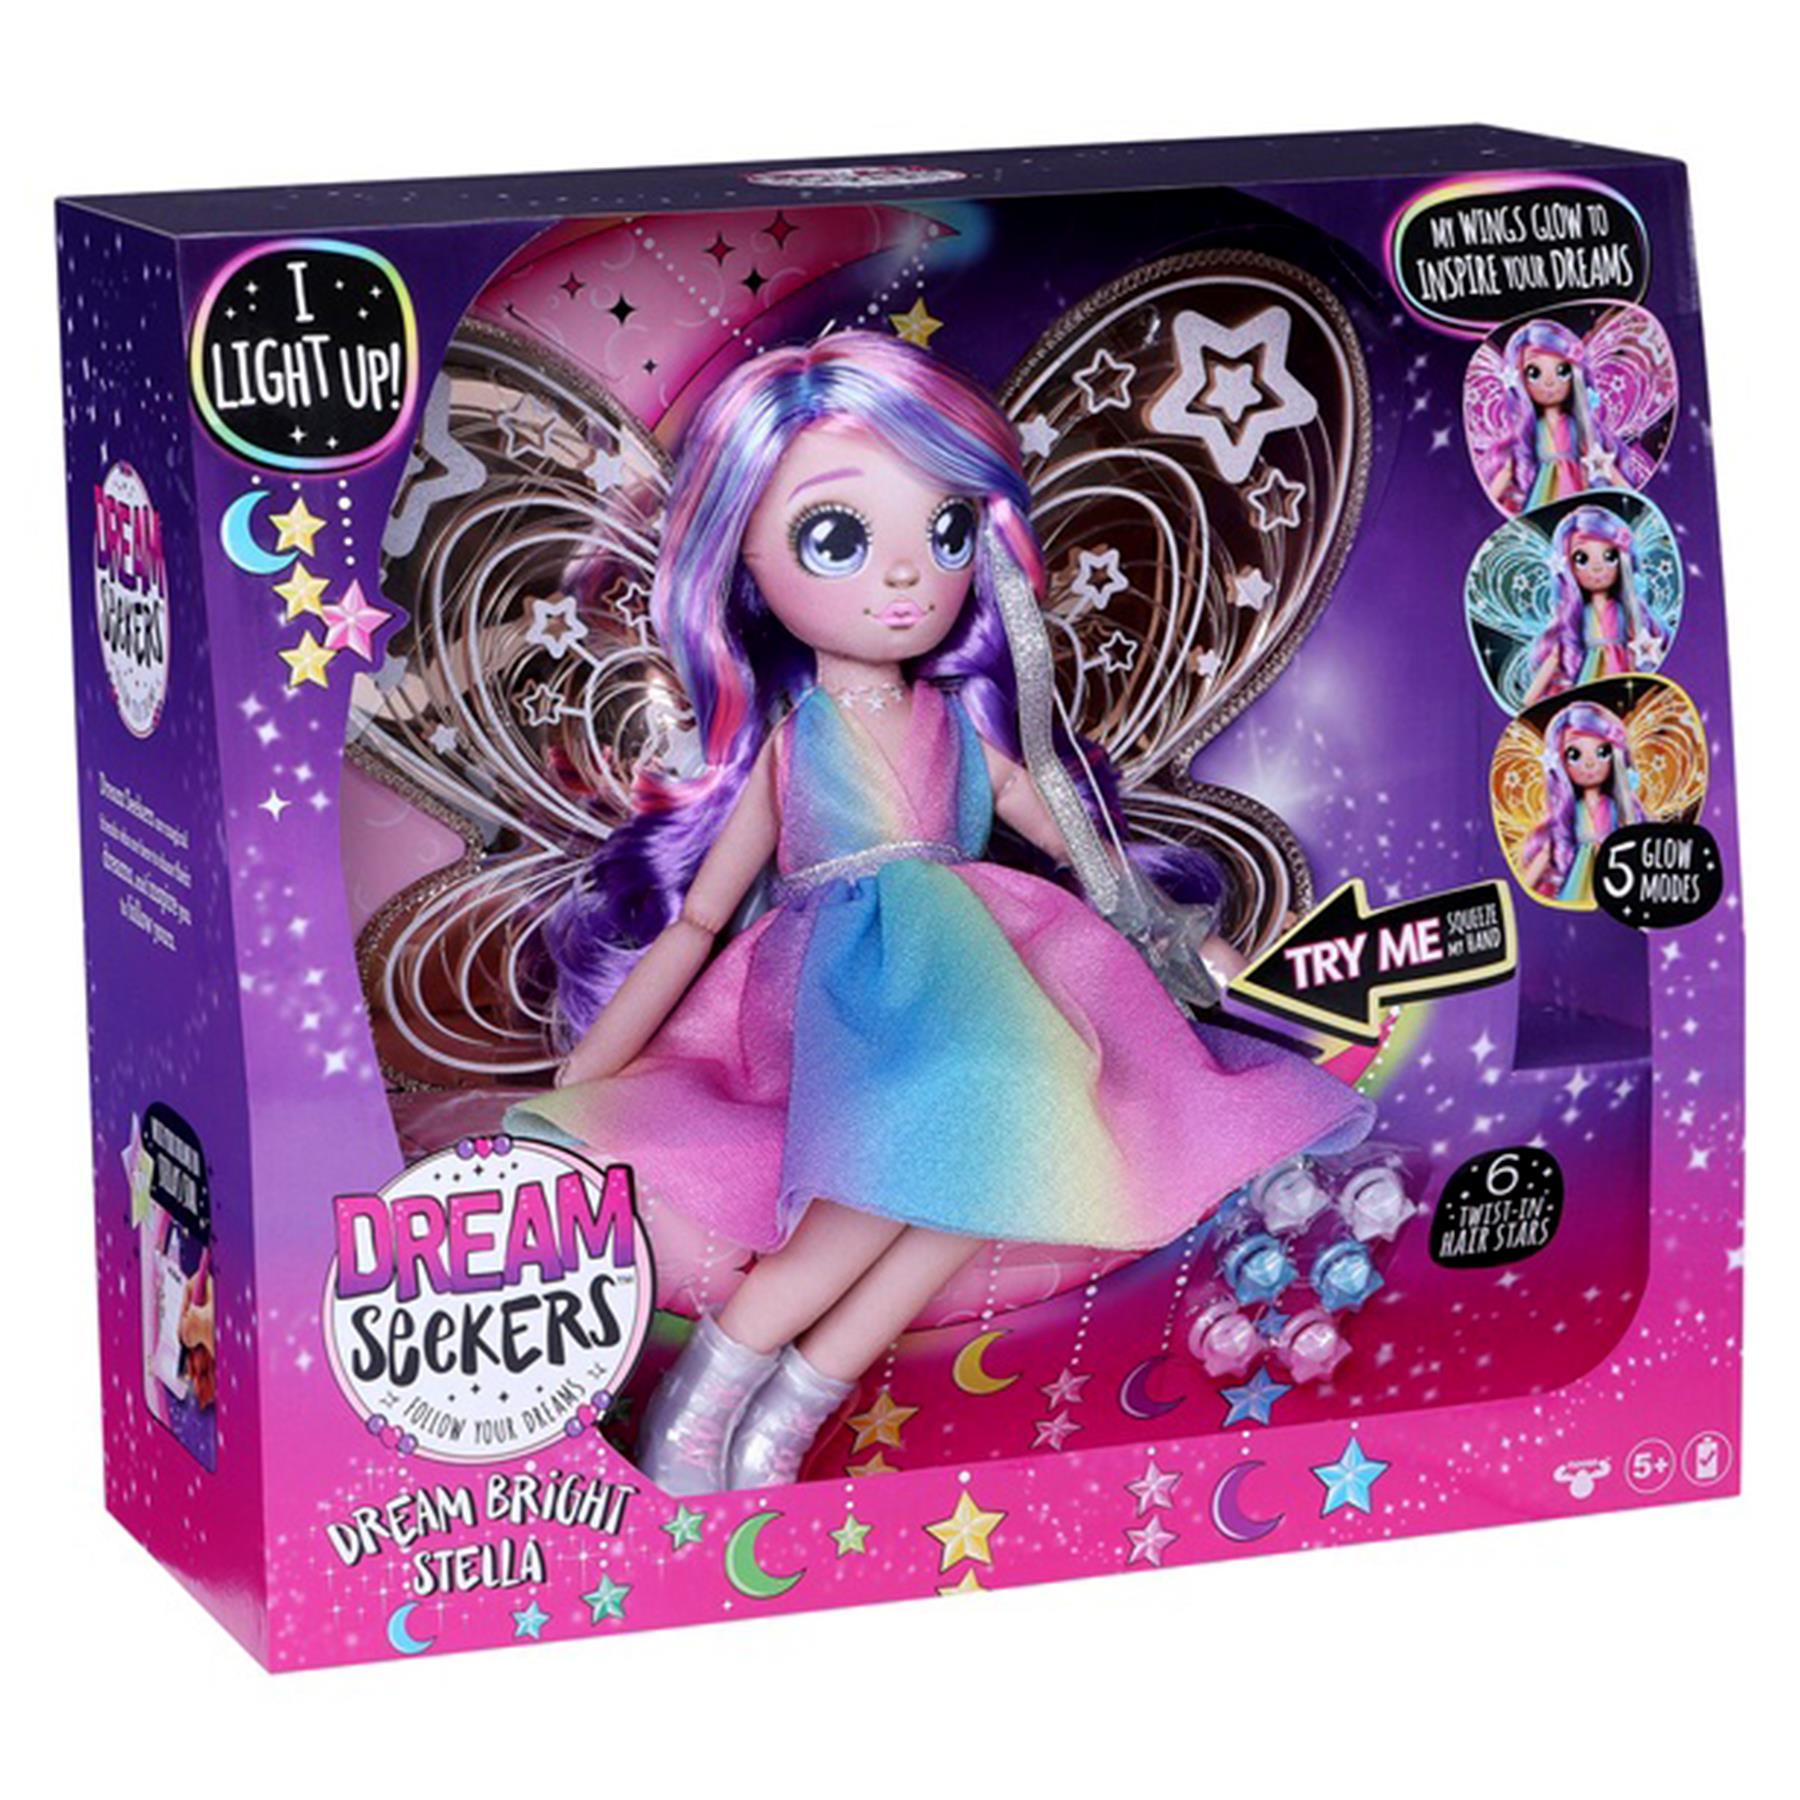 Stella Dream Seekers Dream Bright Fairy Fashion Doll by The Magic Toy Shop - UKBuyZone